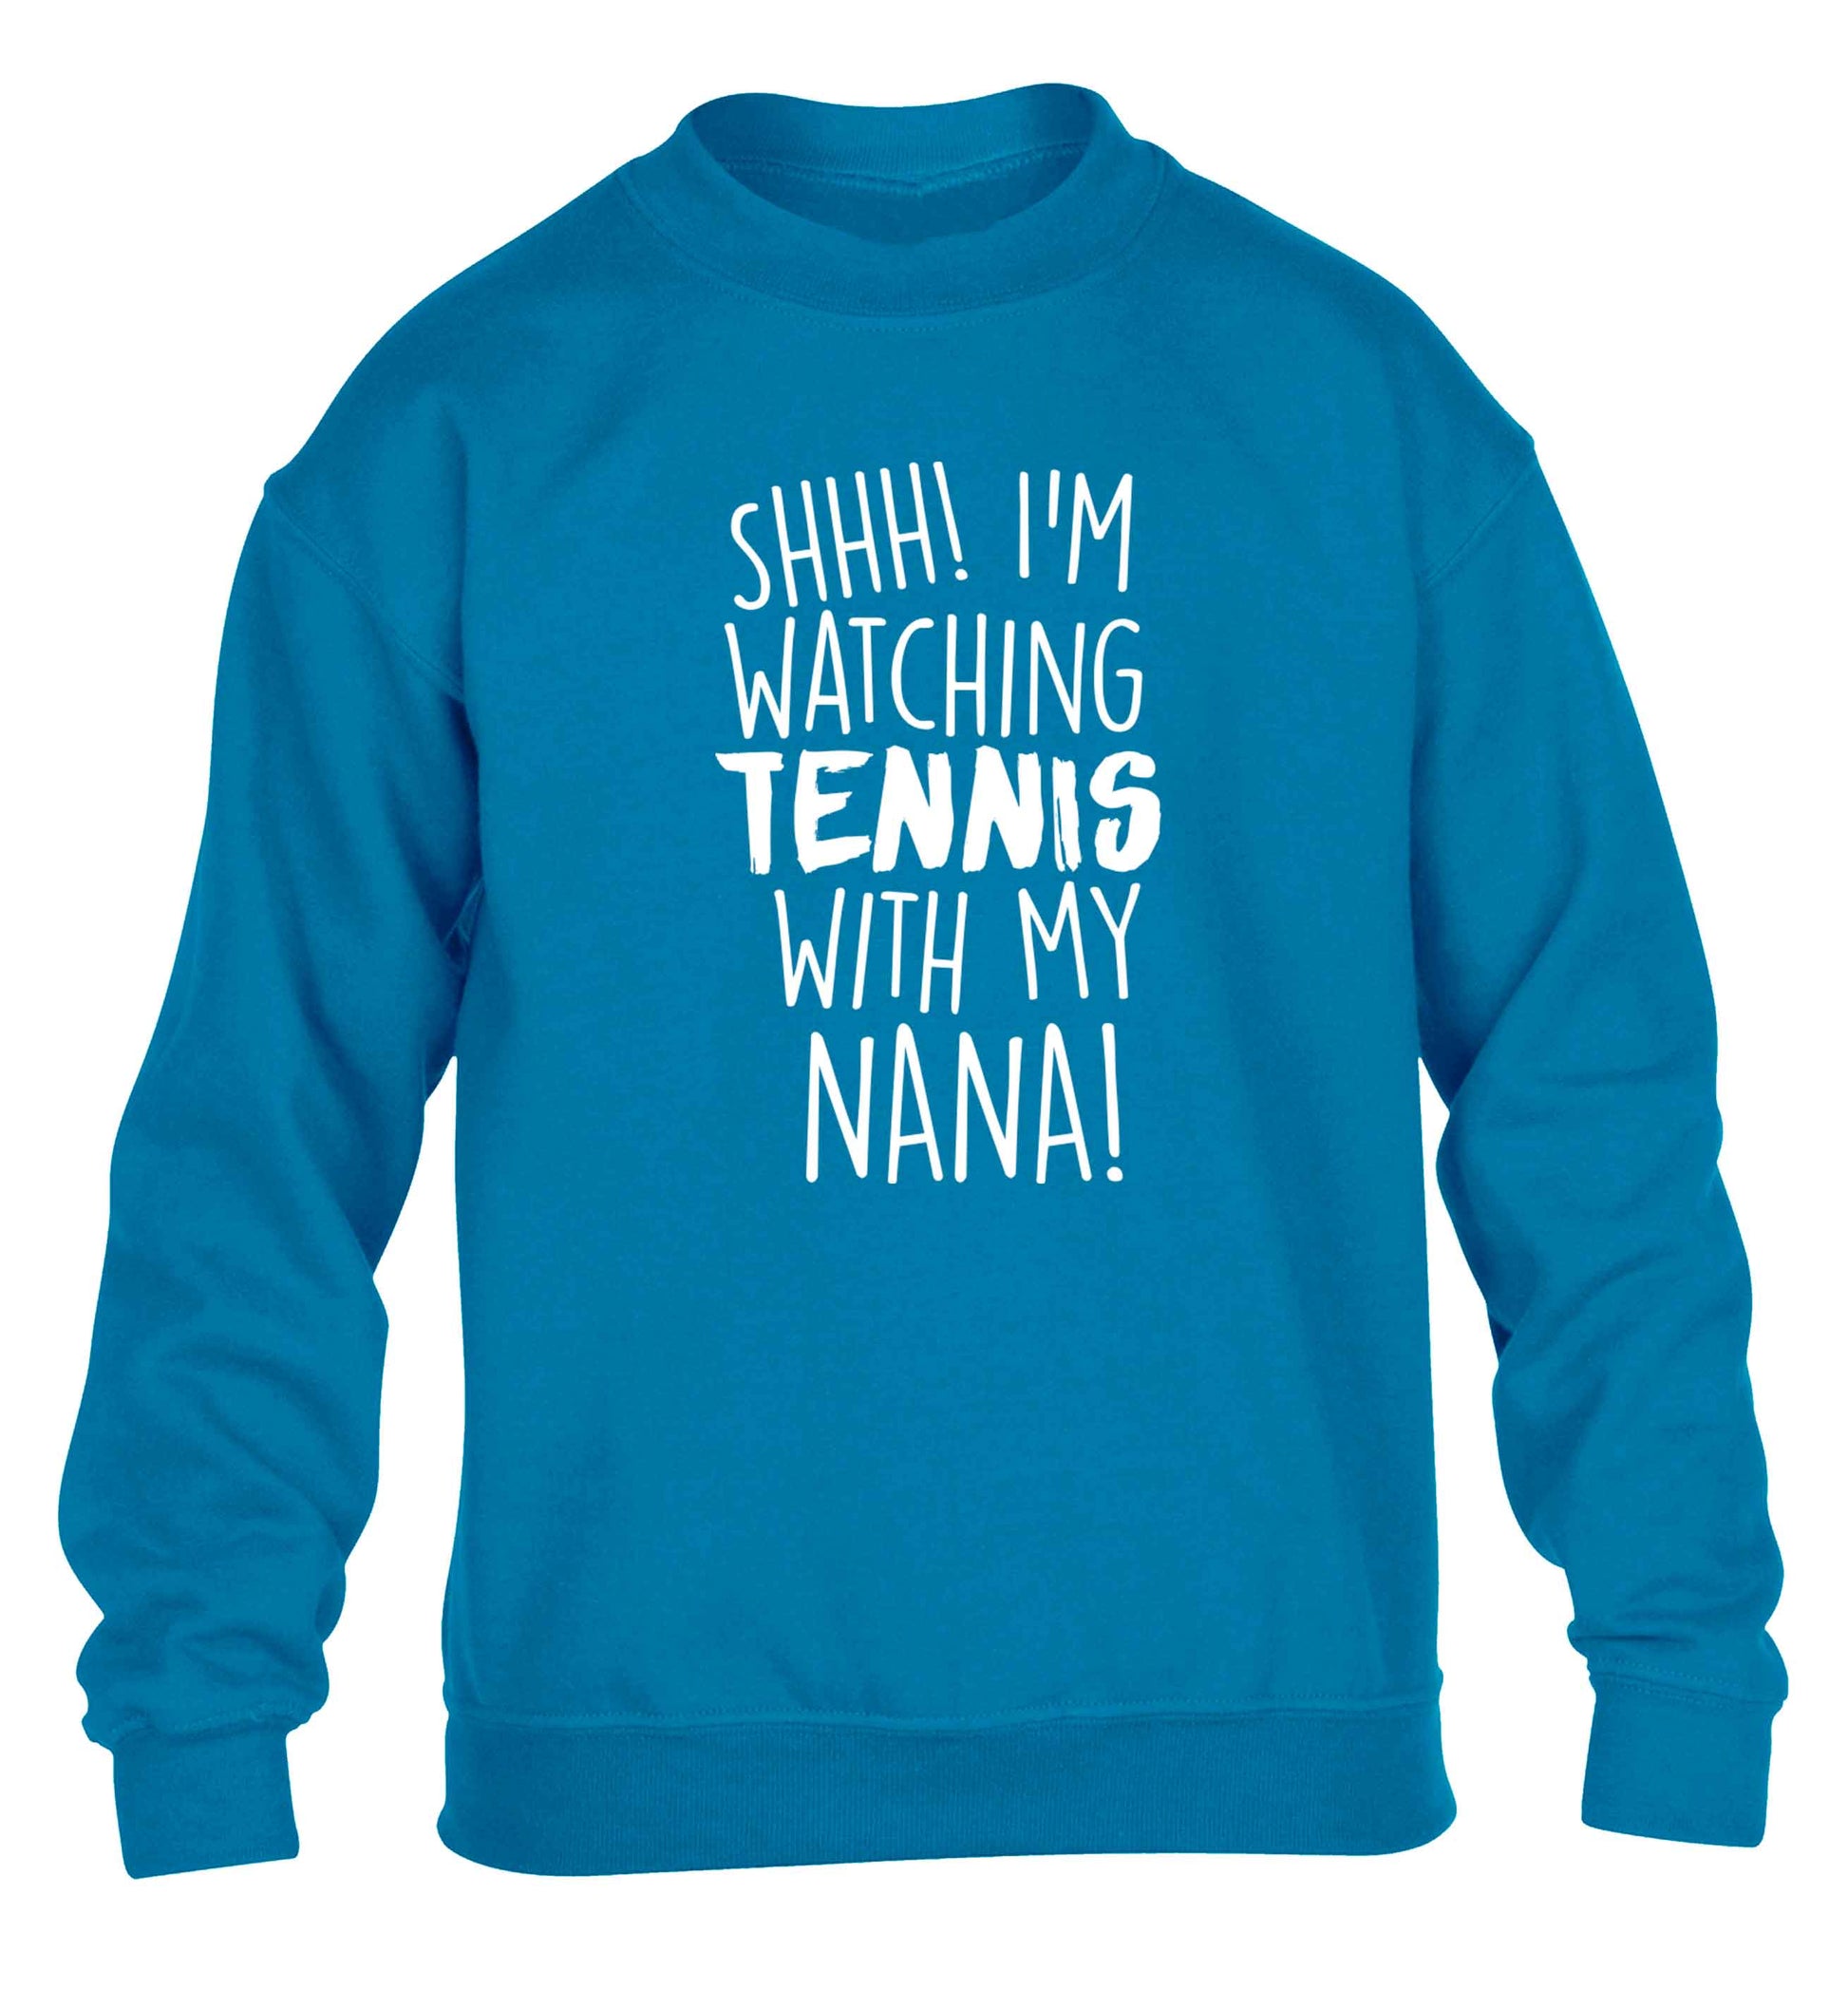 Shh! I'm watching tennis with my nana! children's blue sweater 12-13 Years